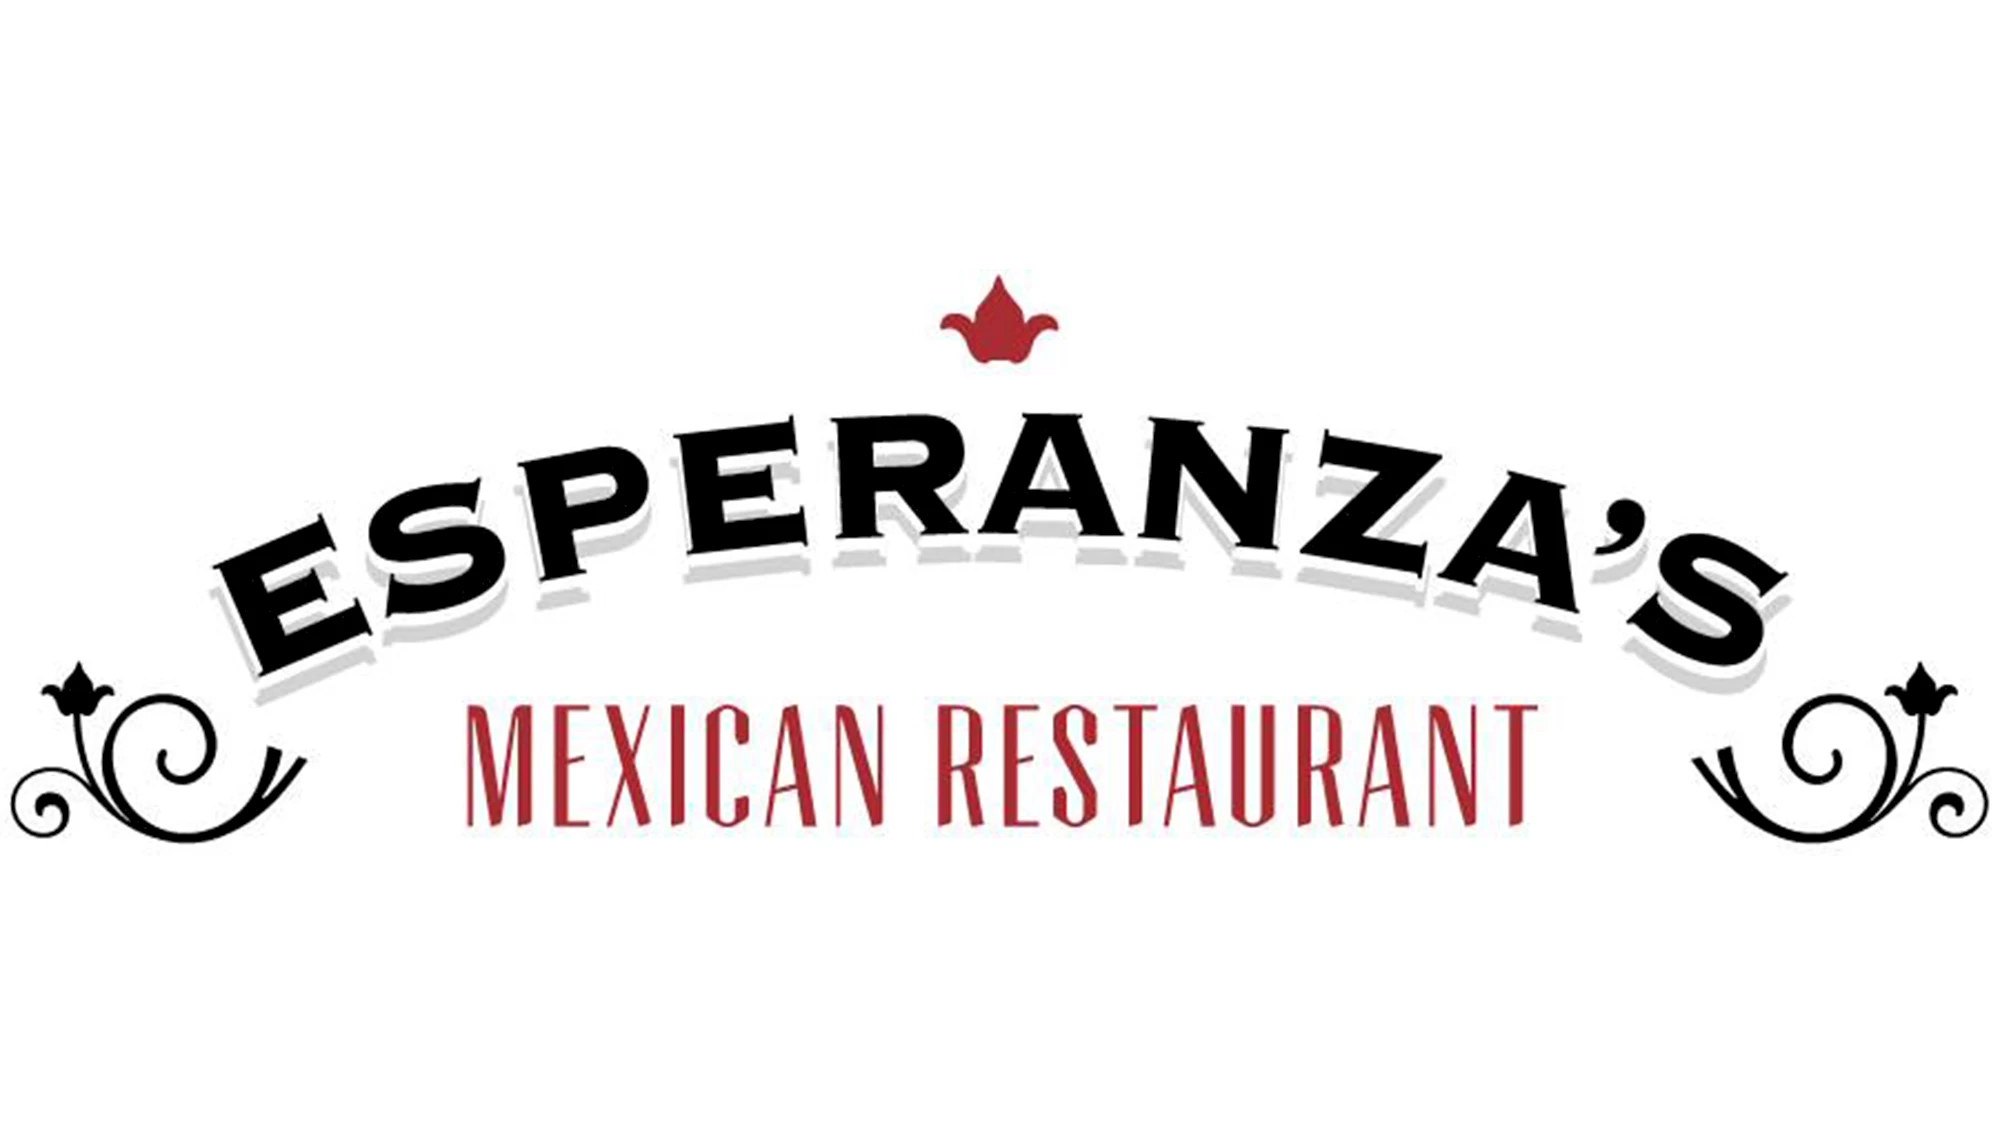 Esperanza's Mexican Restaurant logo | Telluride